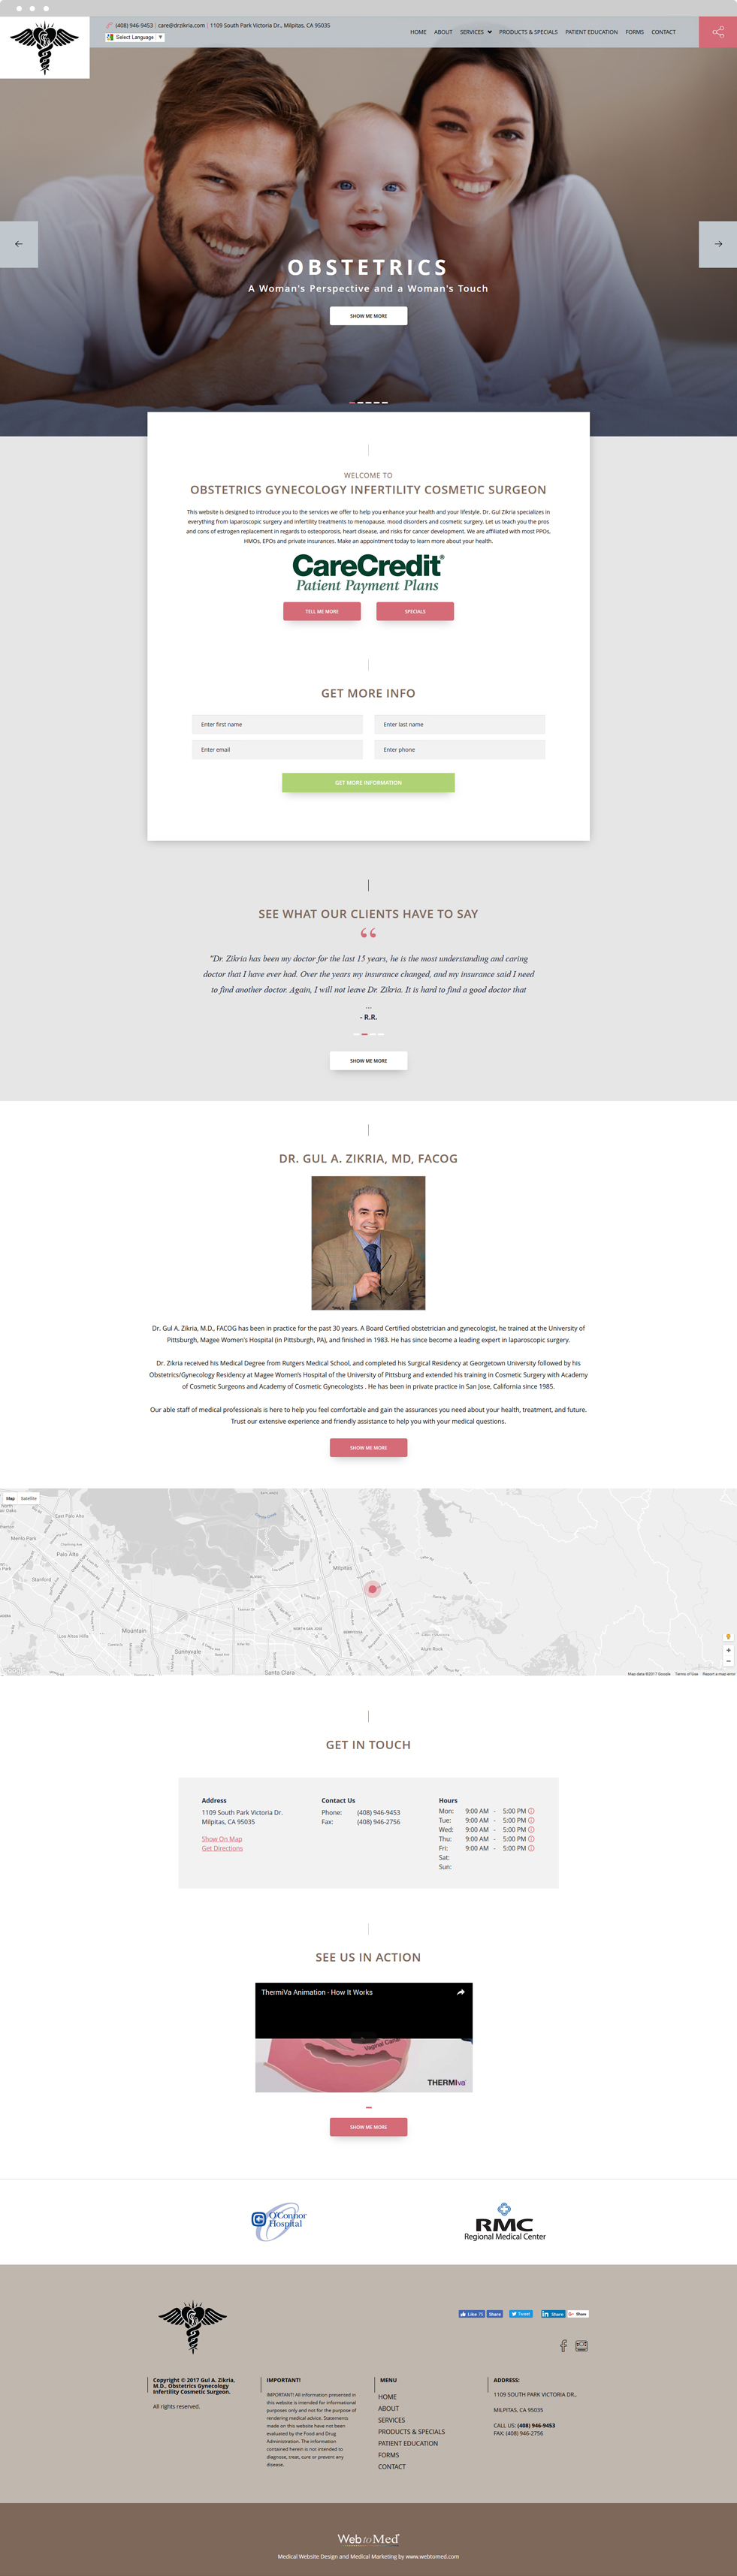 OBGYN Website Design - Dr. Zikria, M.D. - Homepage